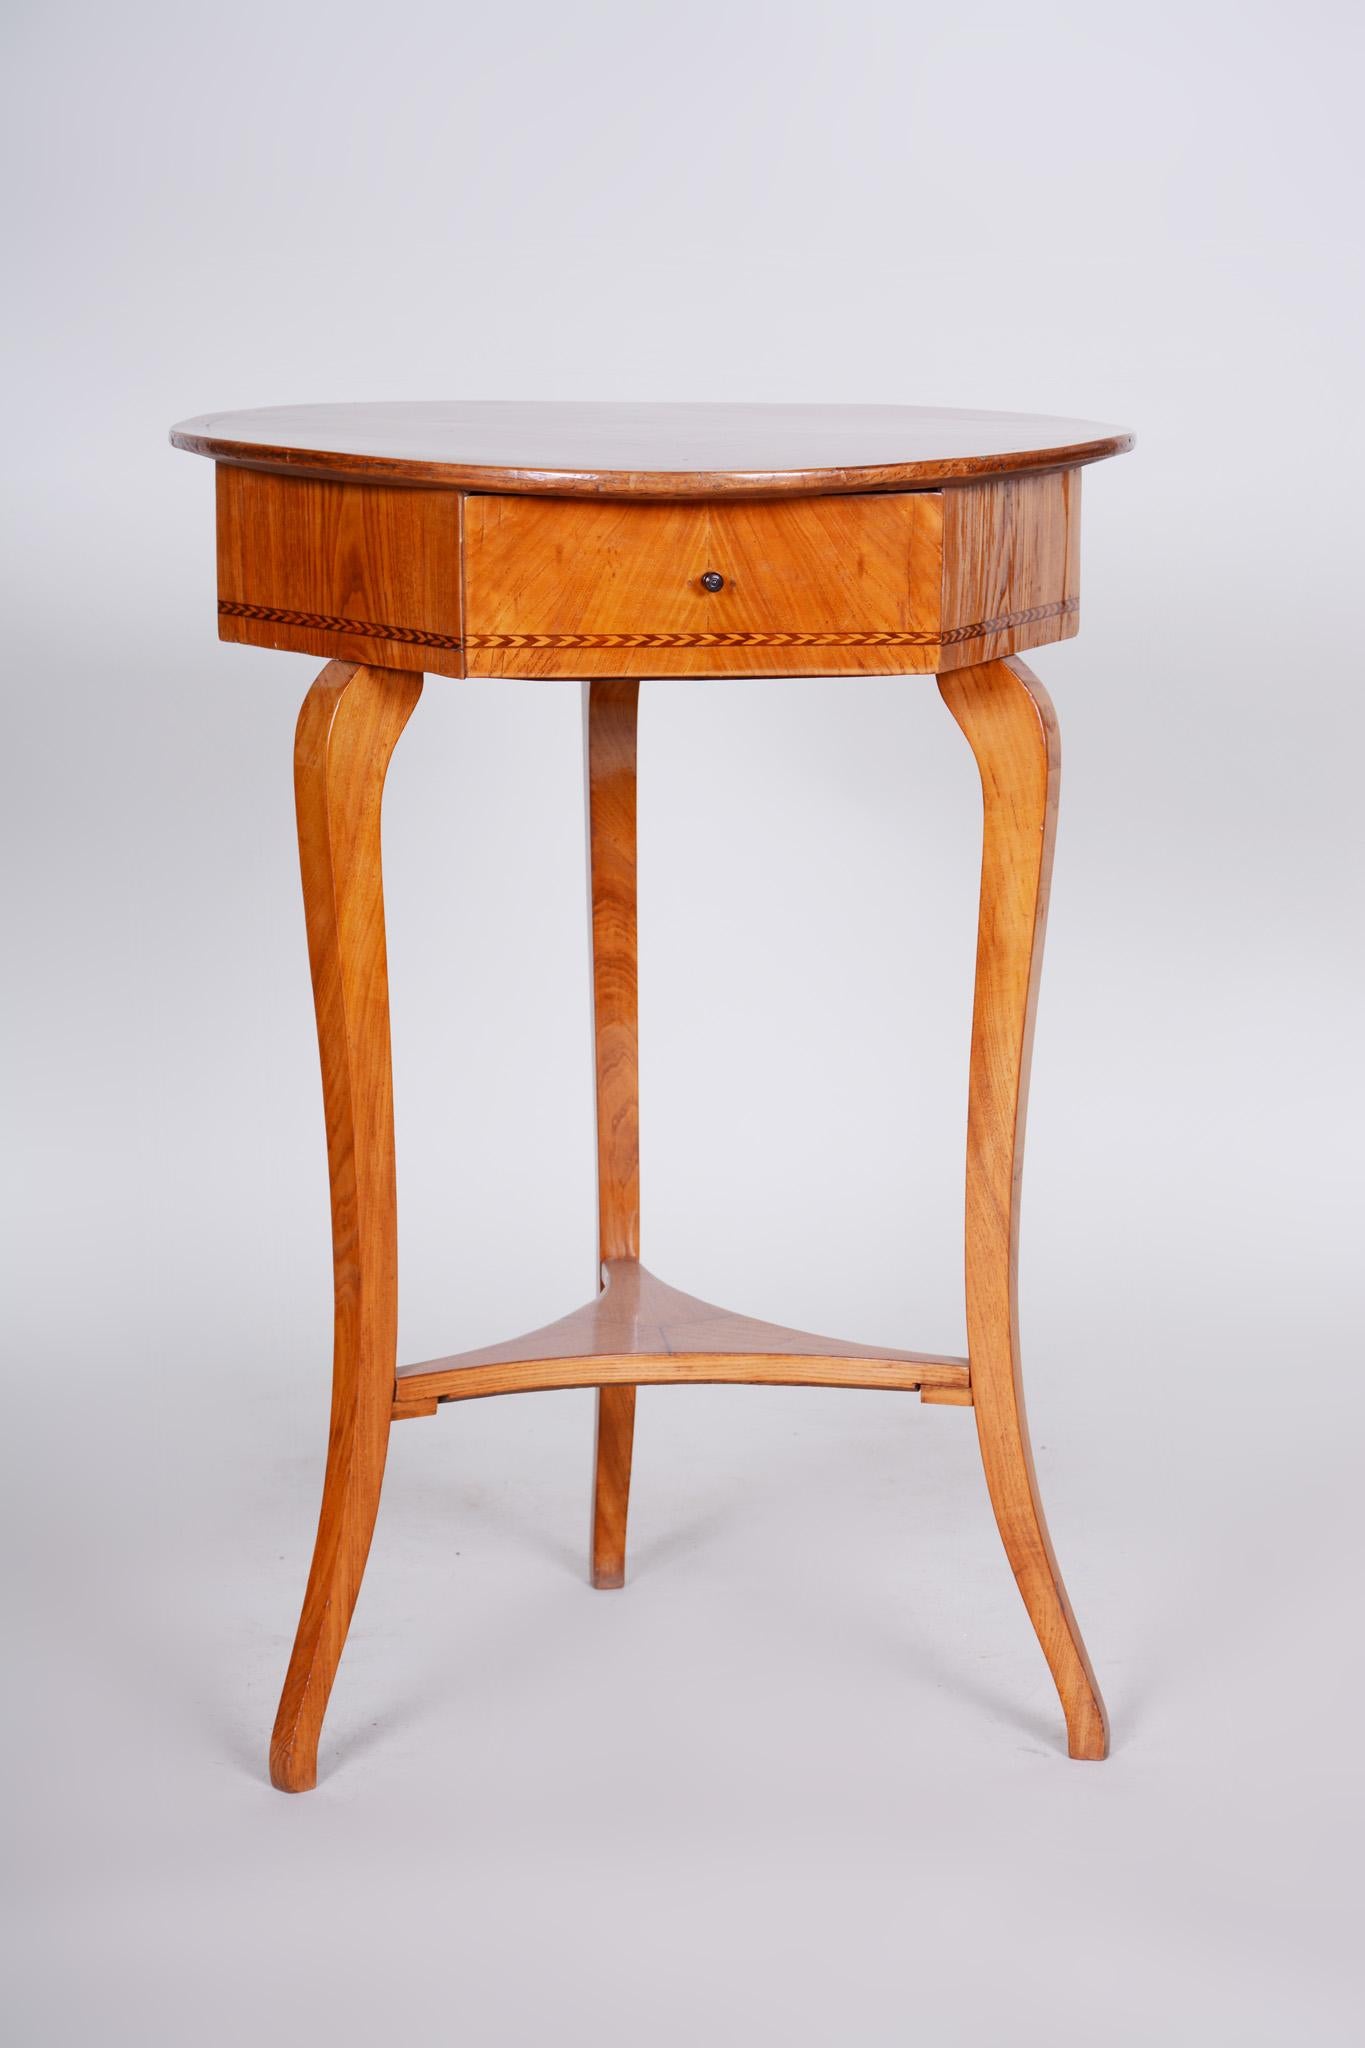 Biedermeier - Classicism small table.
Period: 1780-1839
Material: Elm
Source: Austria (Vienna)
Shellac polished.